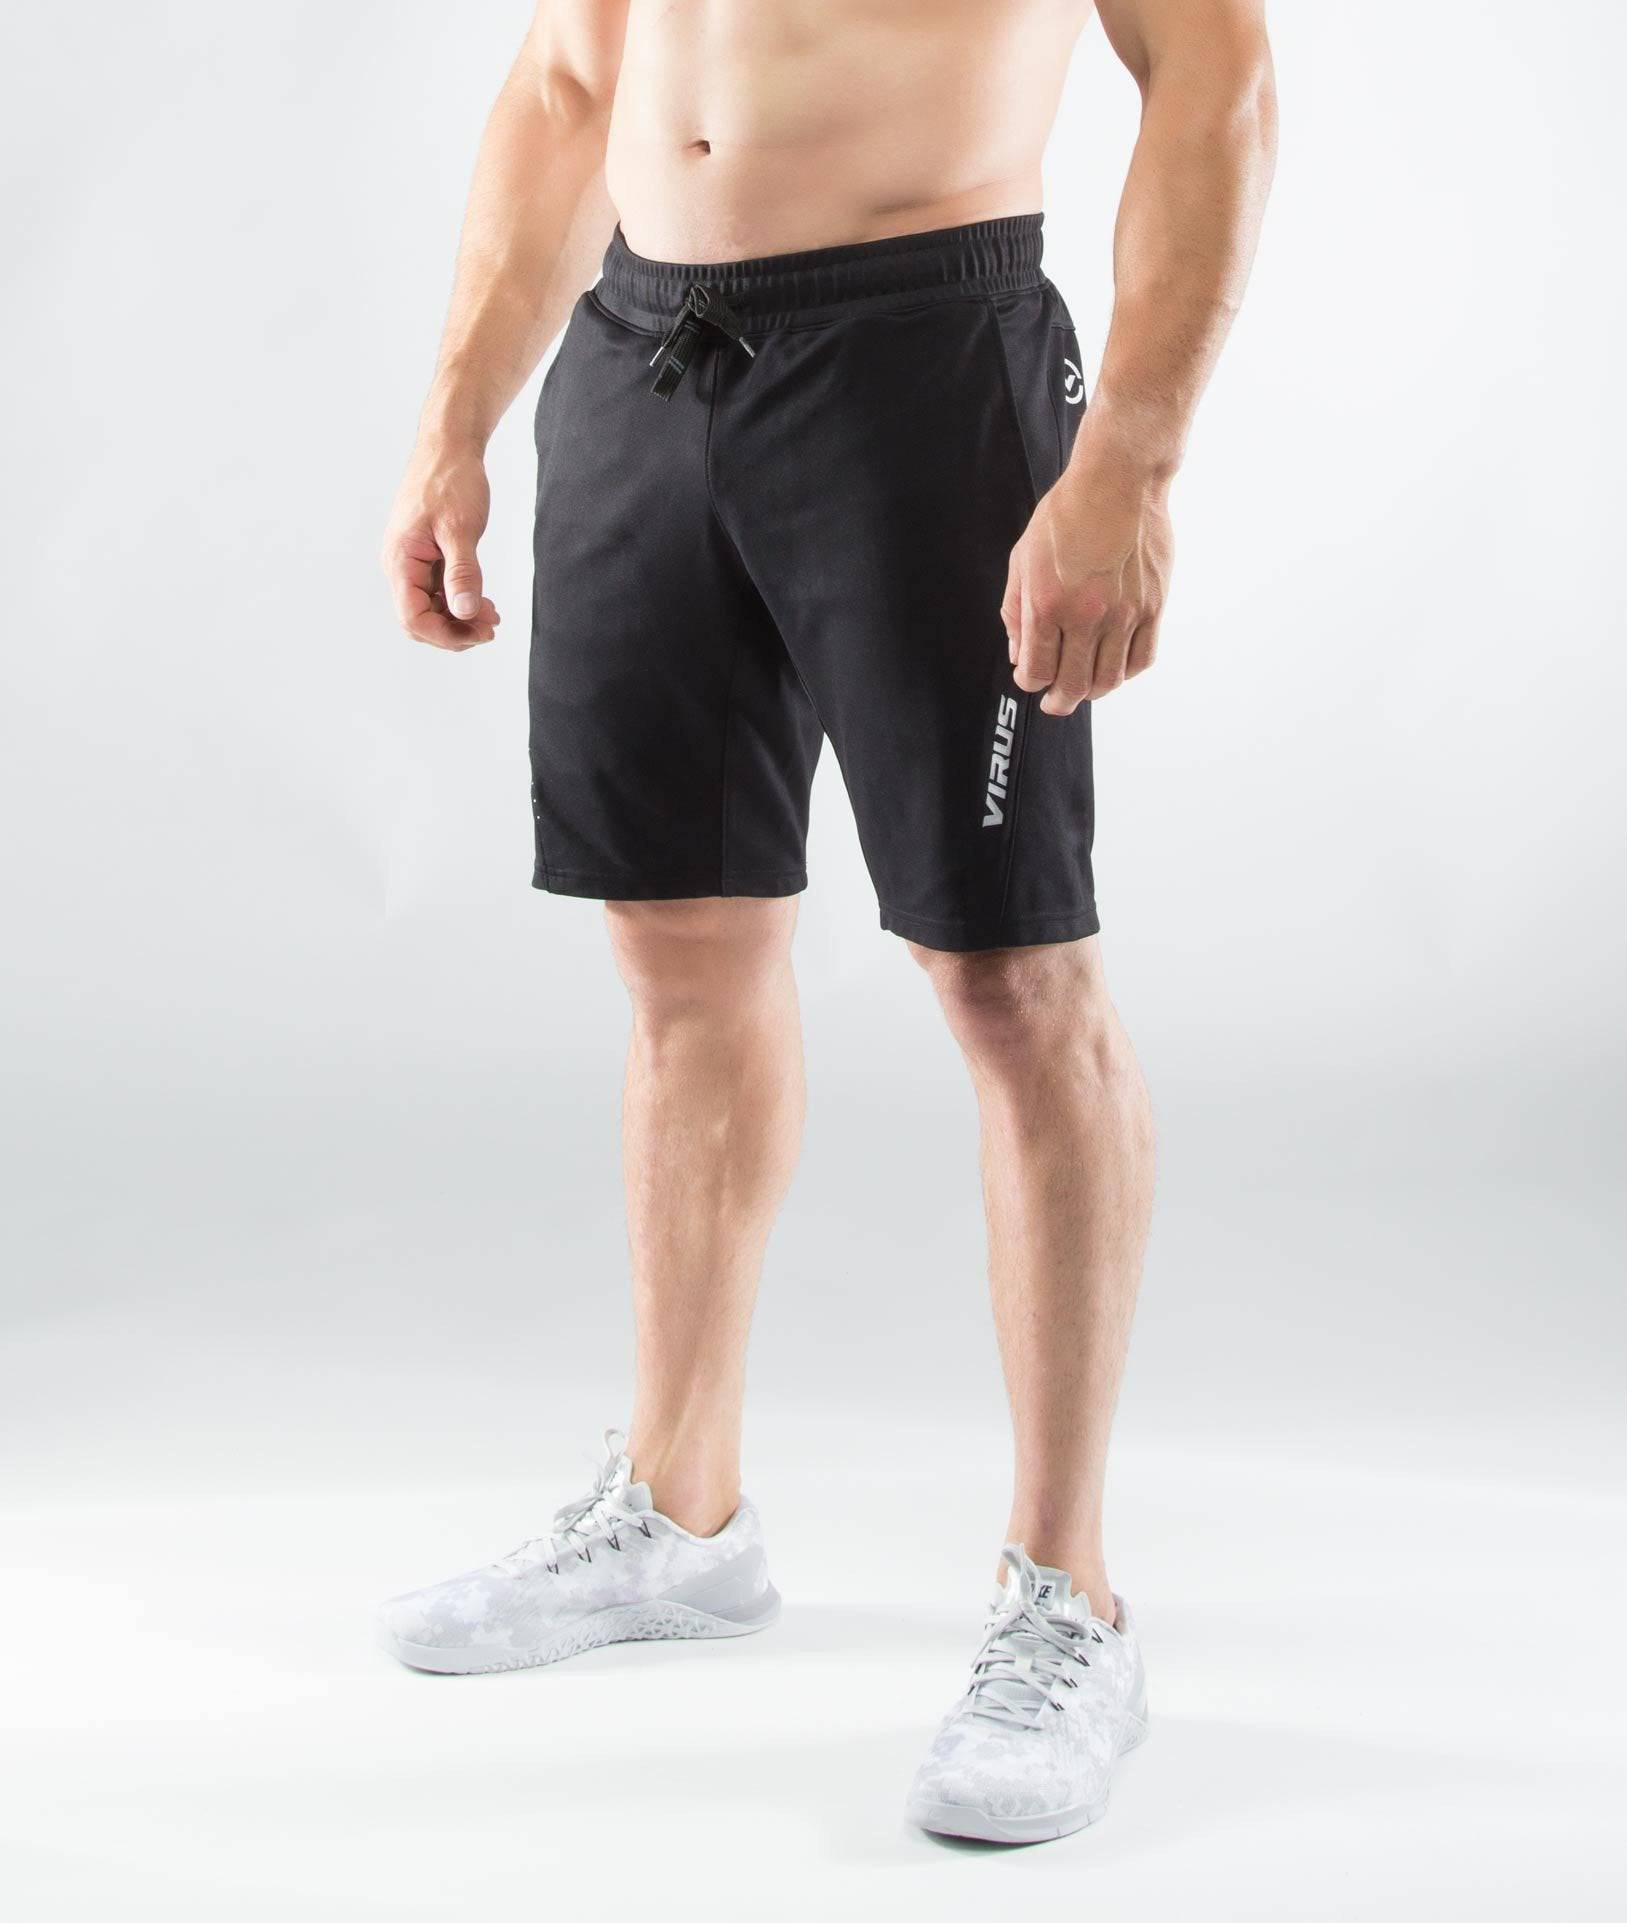 Virus | AU20 Men's Bioceramic IconX Shorts - XTC Fitness - Exercise Equipment Superstore - Canada - Shorts